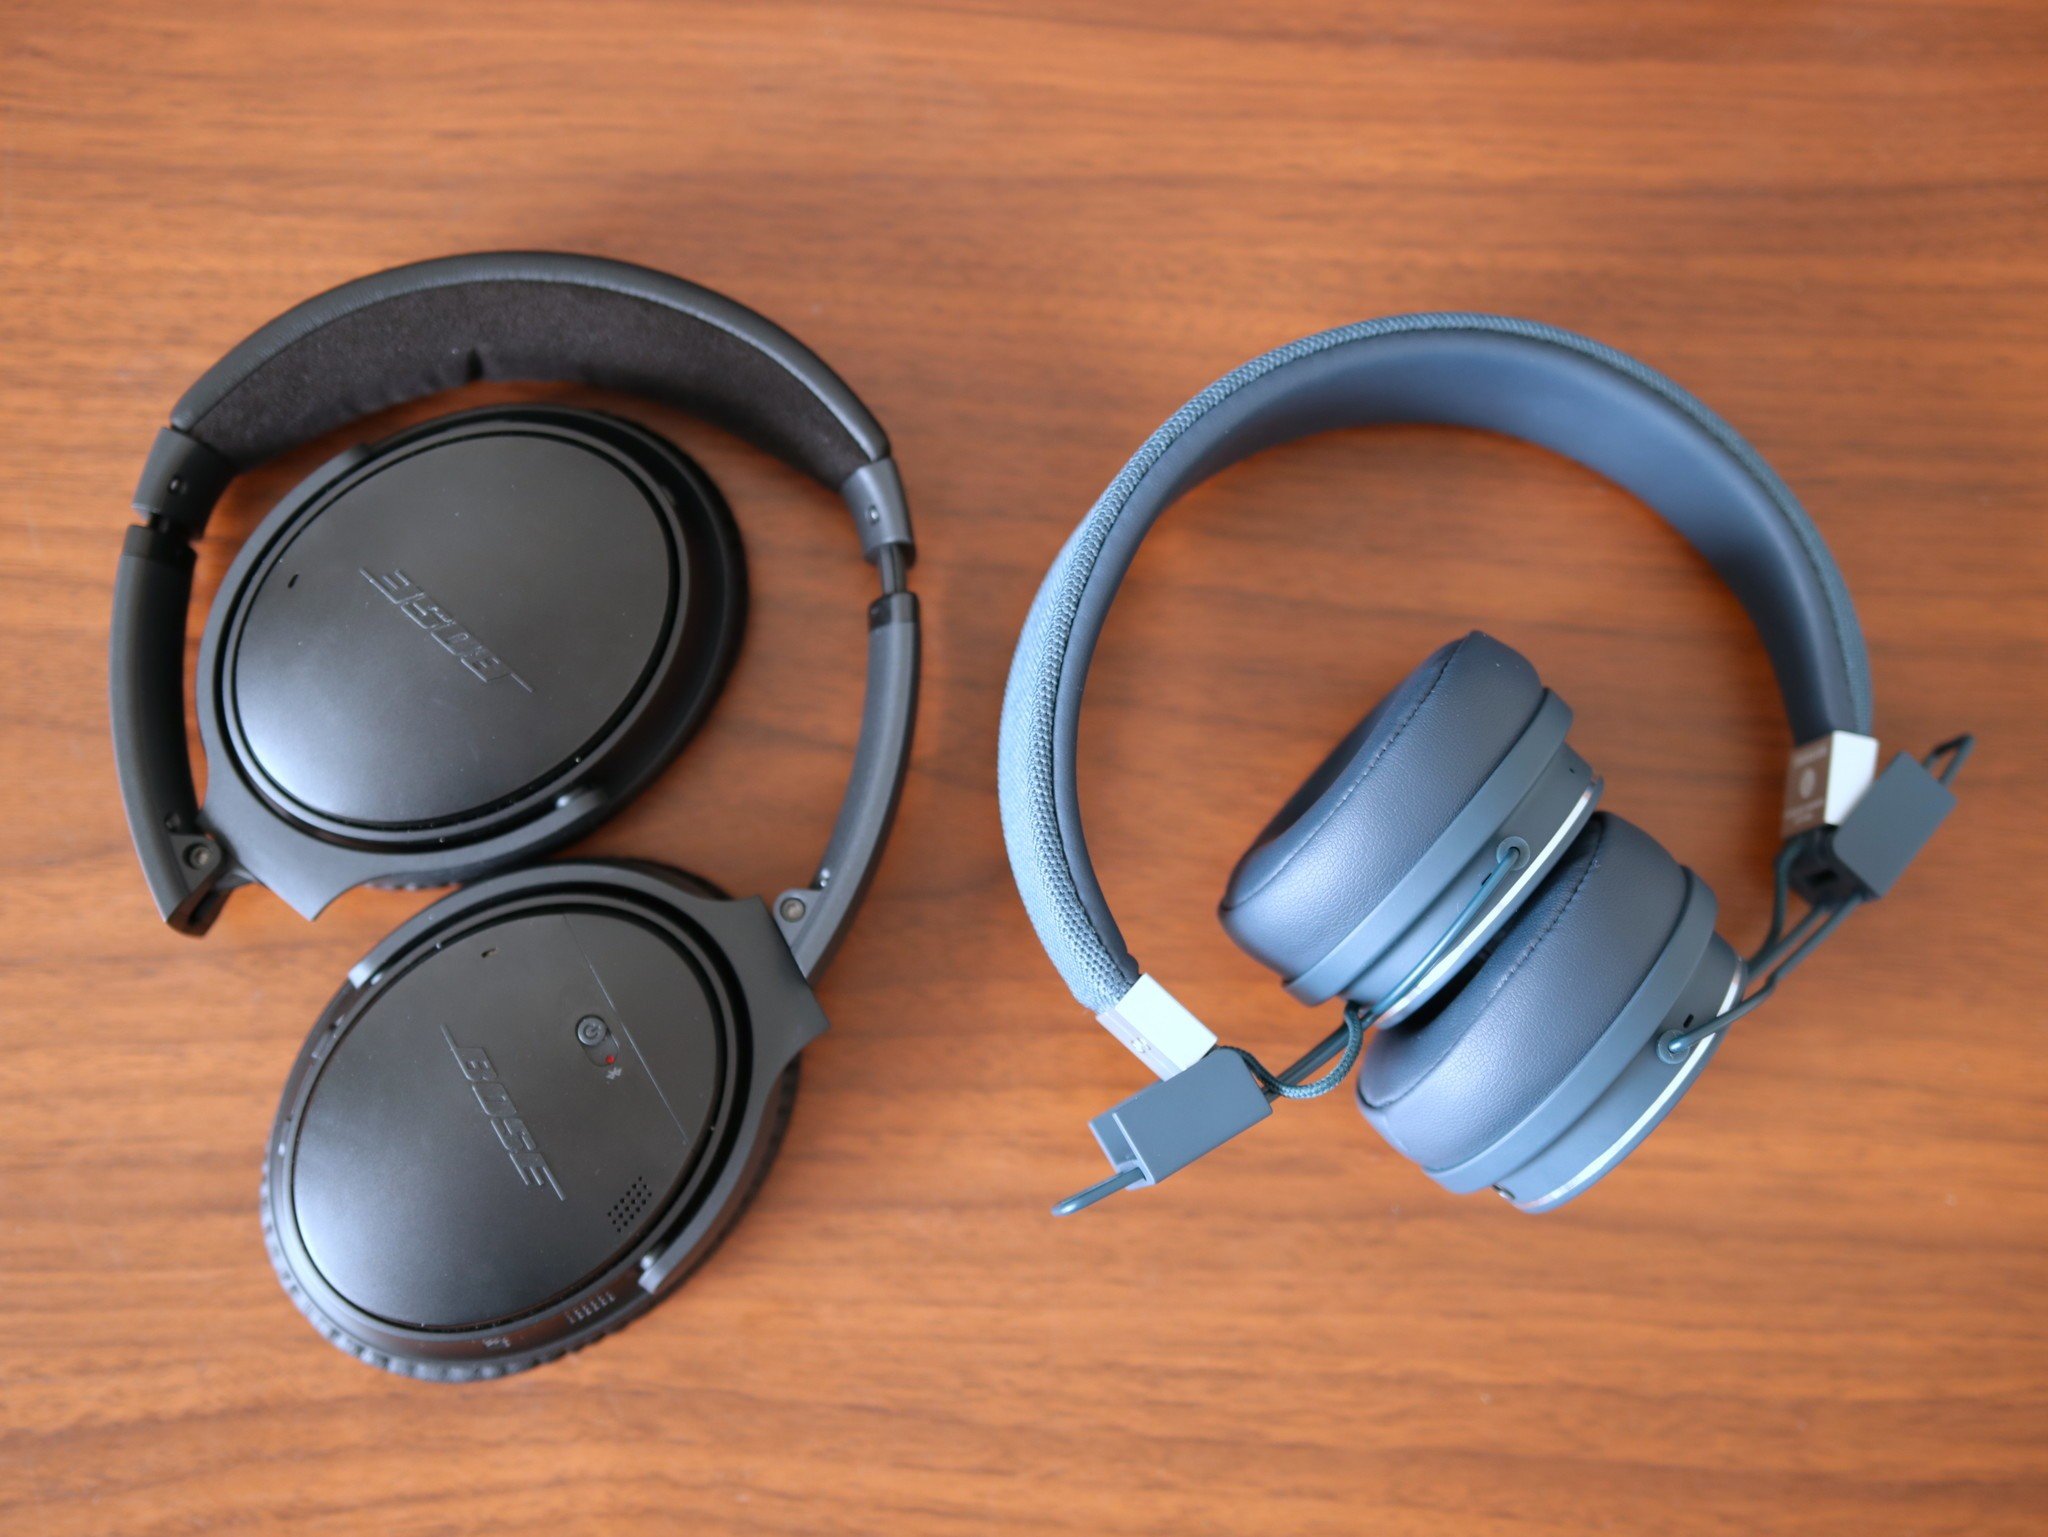 Bose QC35 and Urbanears Plattan 2 headphones